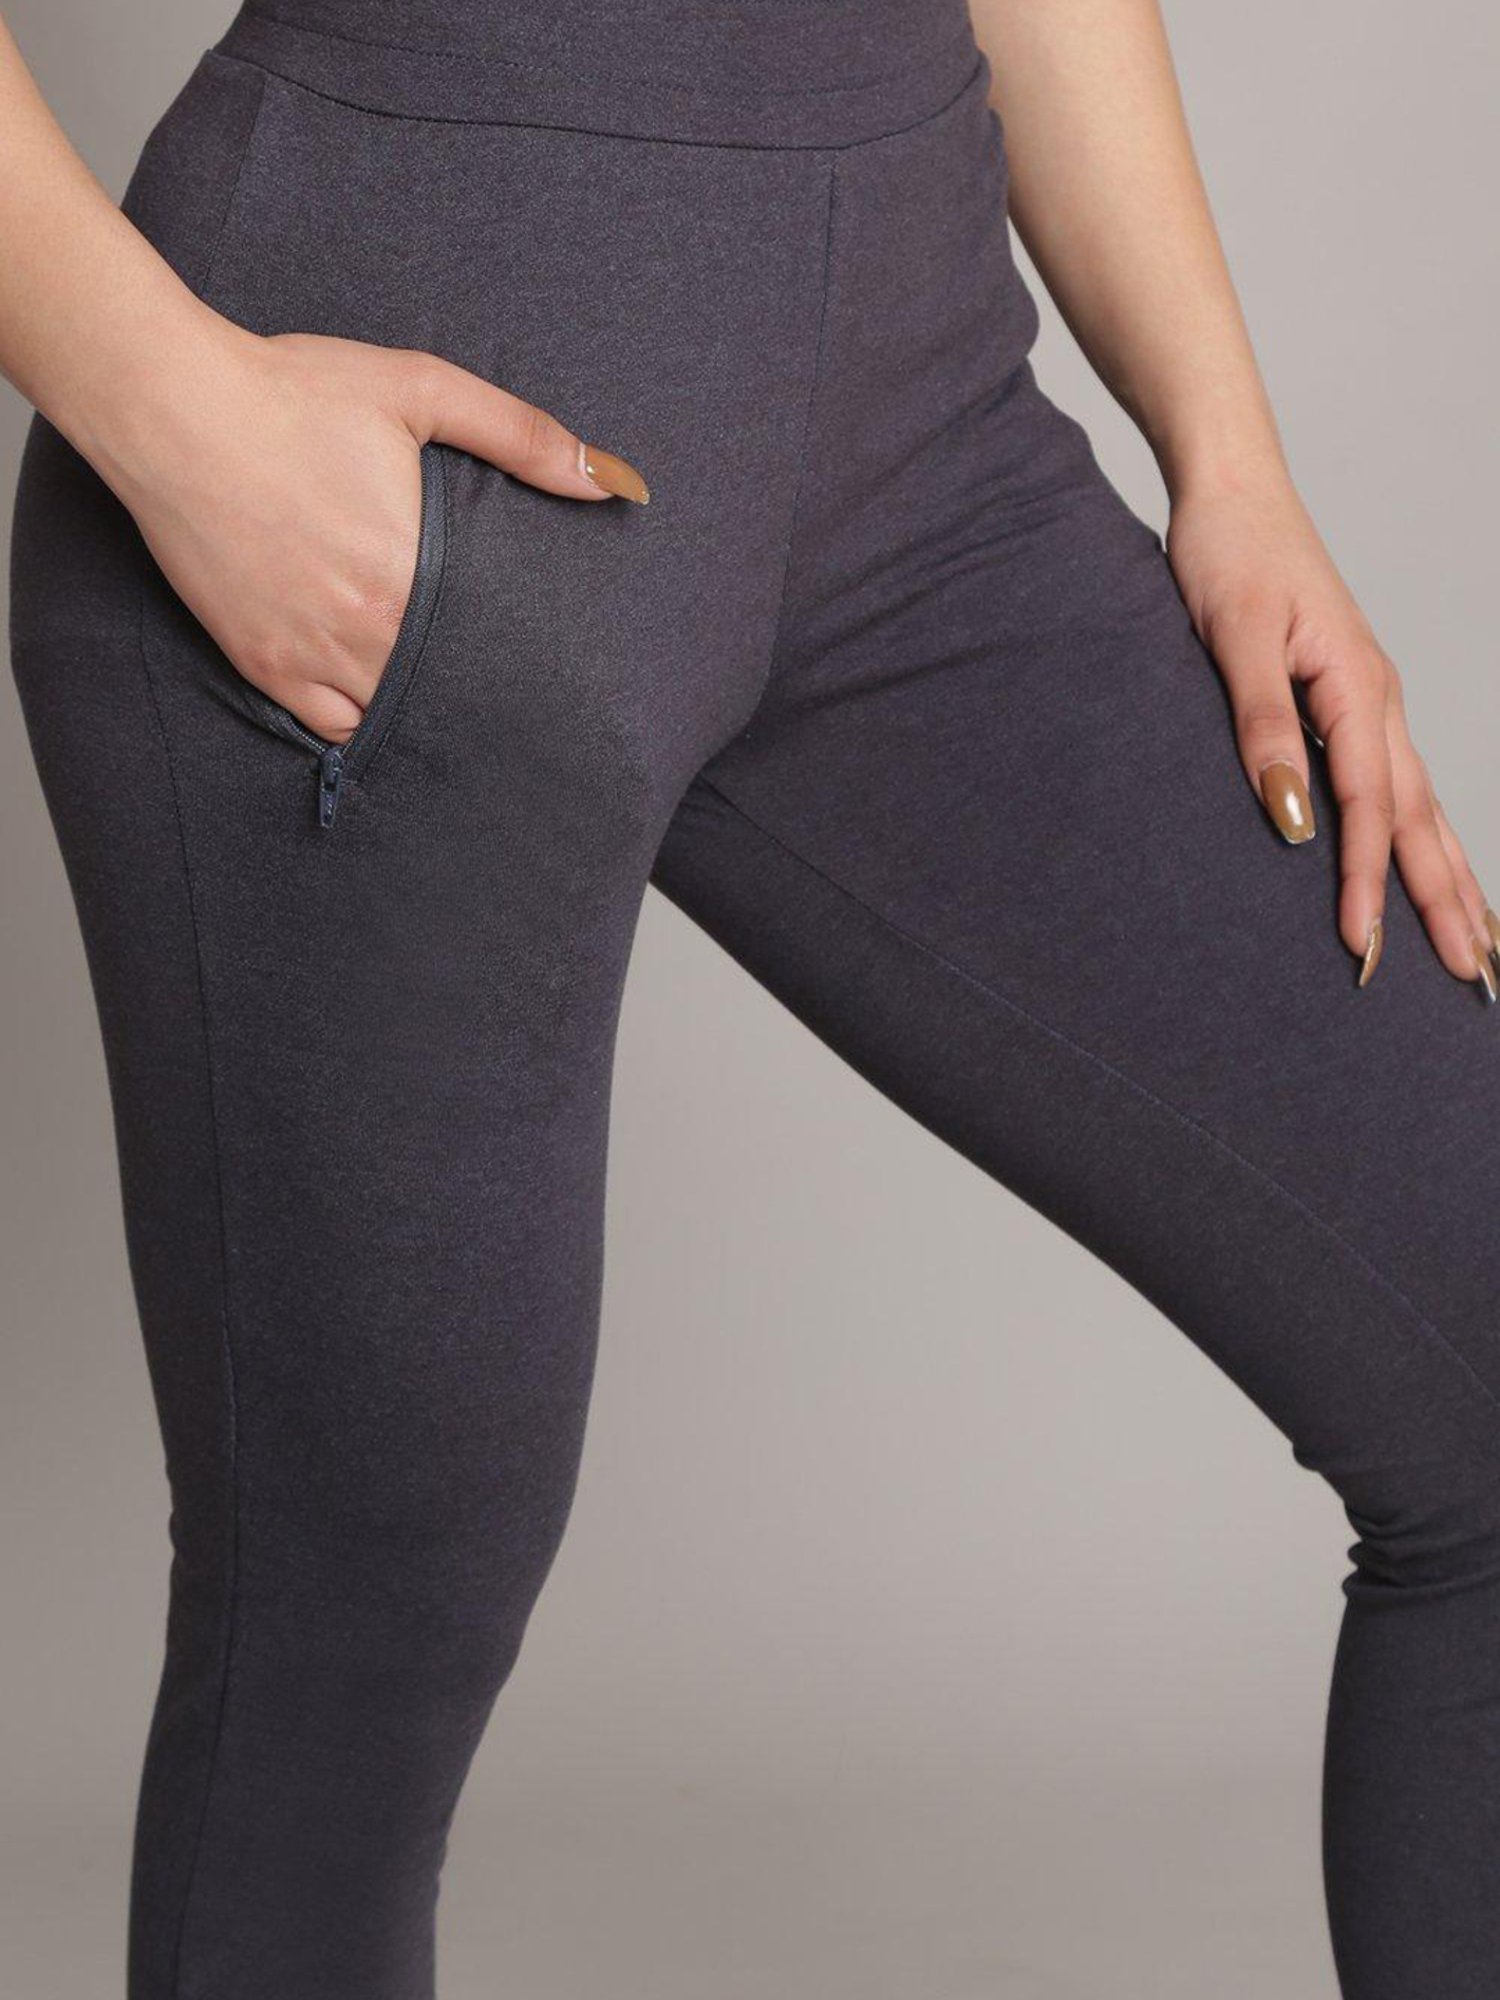 Buy Biba Navy Yoga Pants for Women's Online @ Tata CLiQ